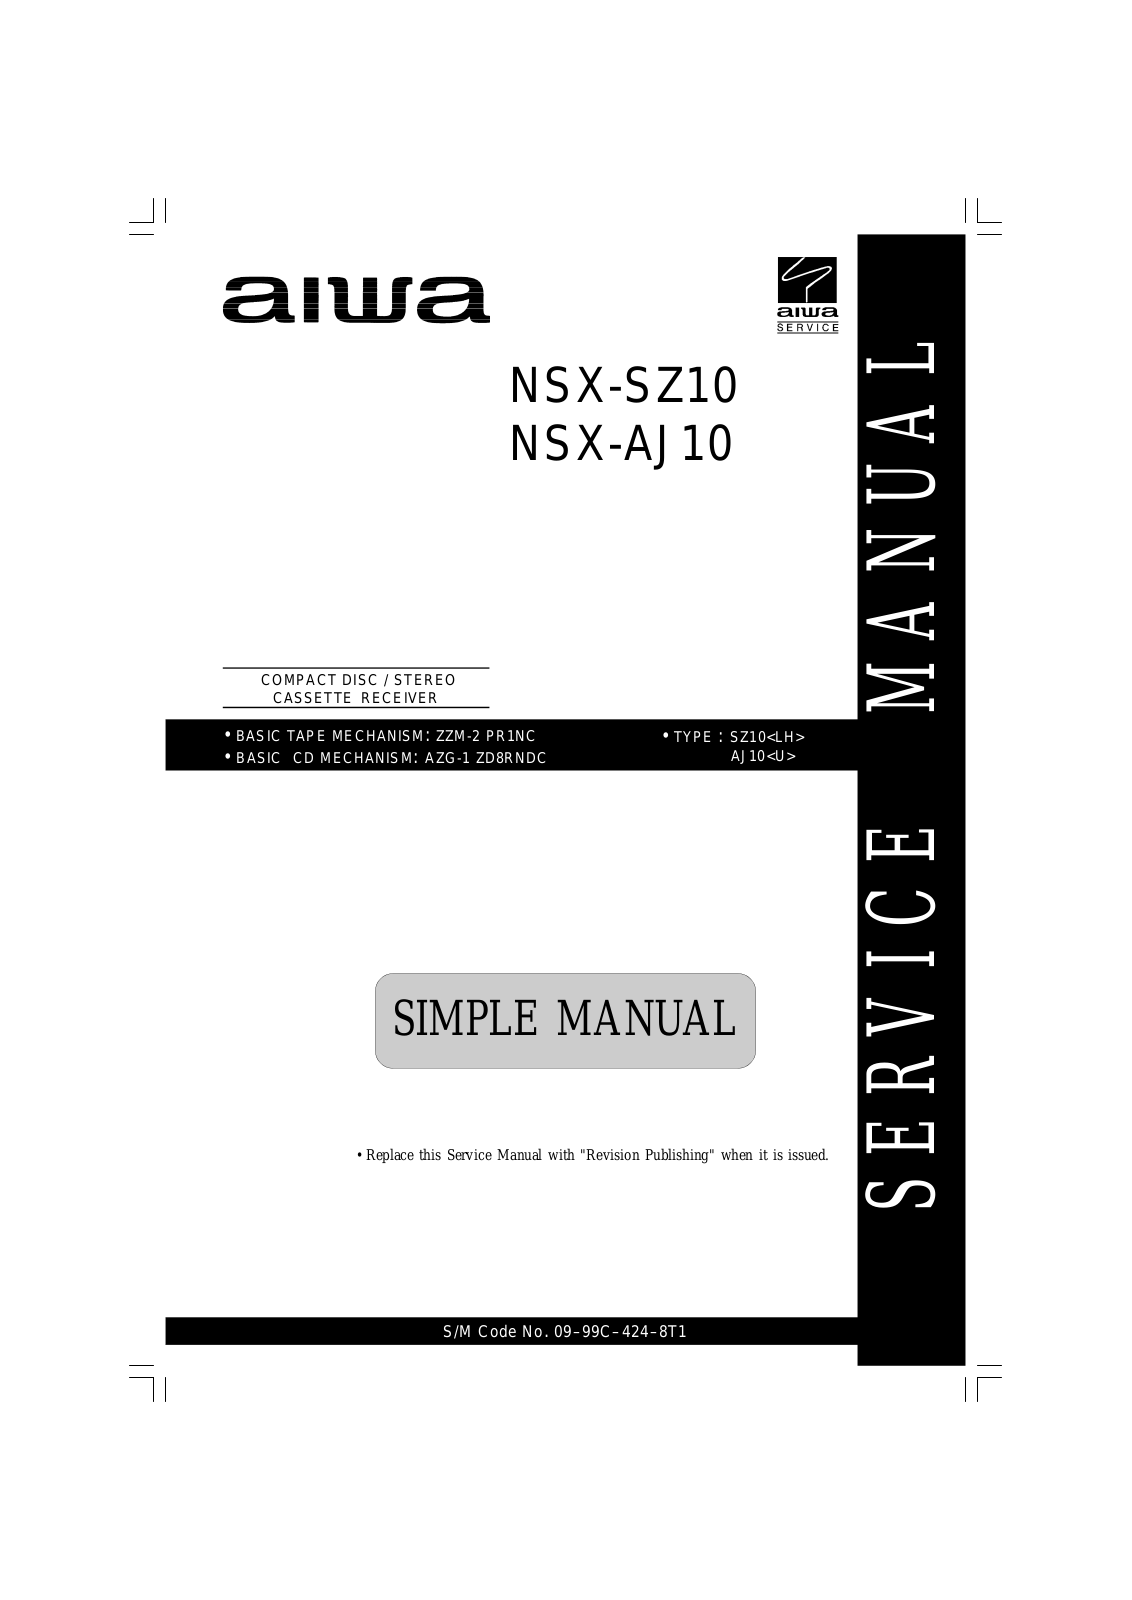 Aiwa NSX-SZ10, NSX-AJ10 Service Manual